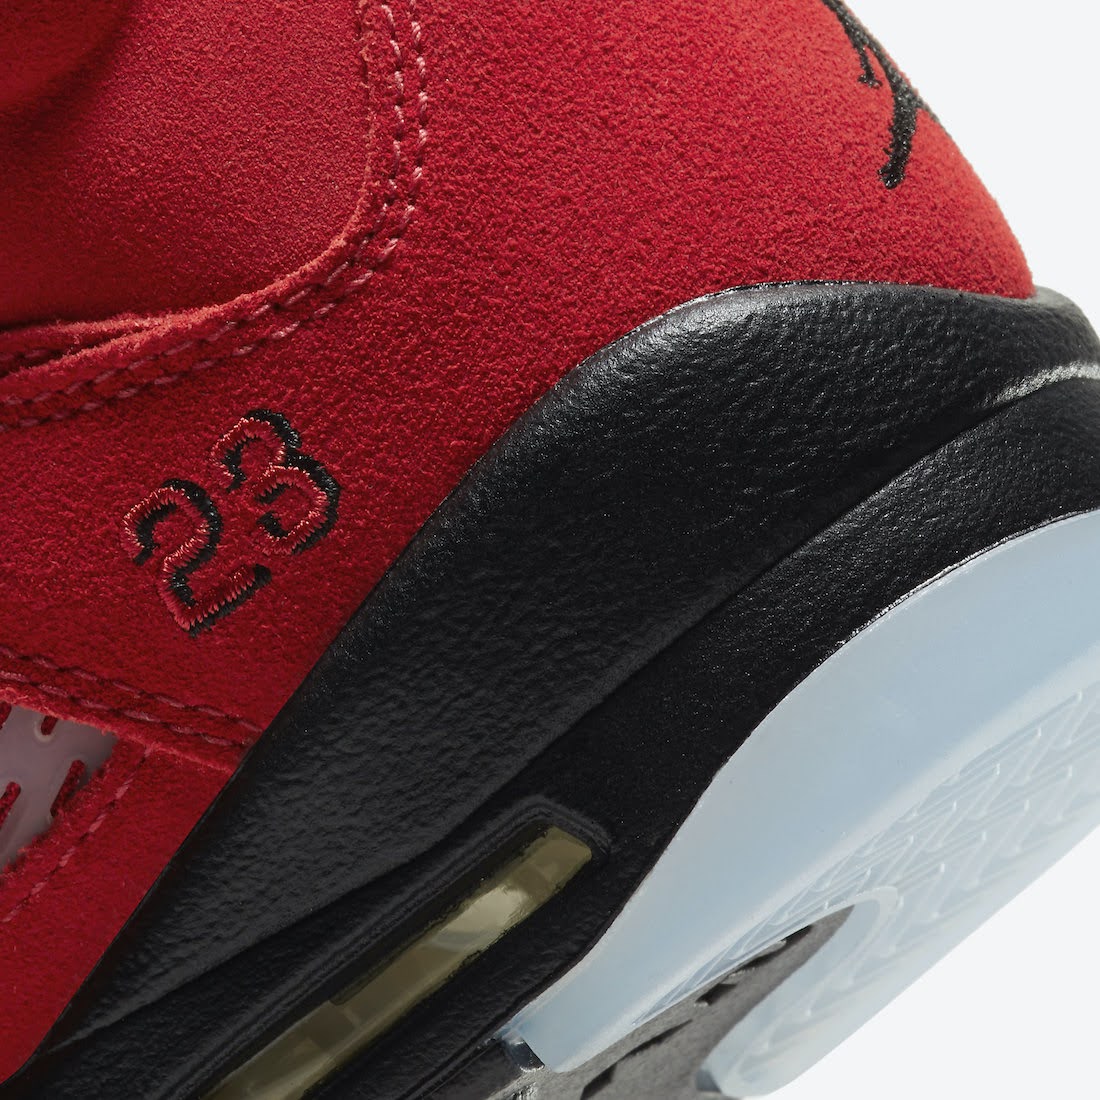 Nike Air Jordan 5 “Raging Bull” / ナイキ エア ジョーダン 5 "レイジング ブル" DD0587-600 detail heel